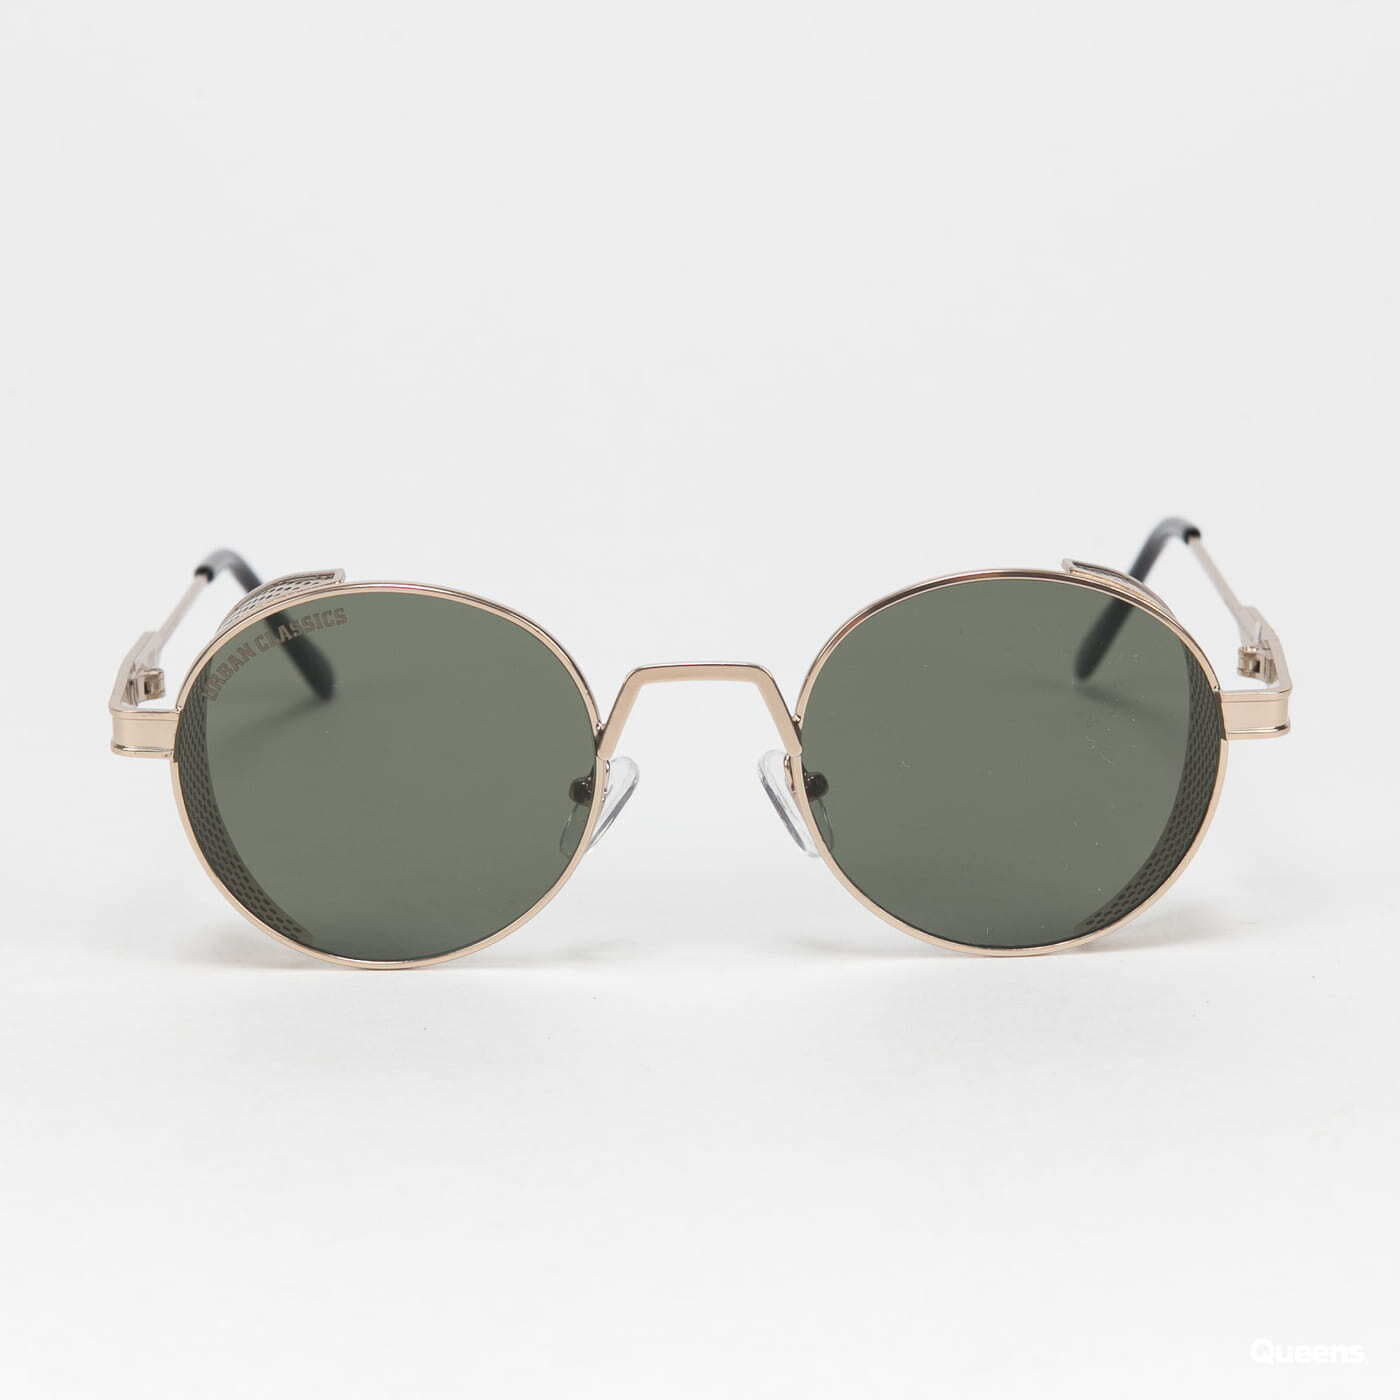 Brown Gold/ Urban | Classics Sunglasses Queens Sicilia Sunglasses